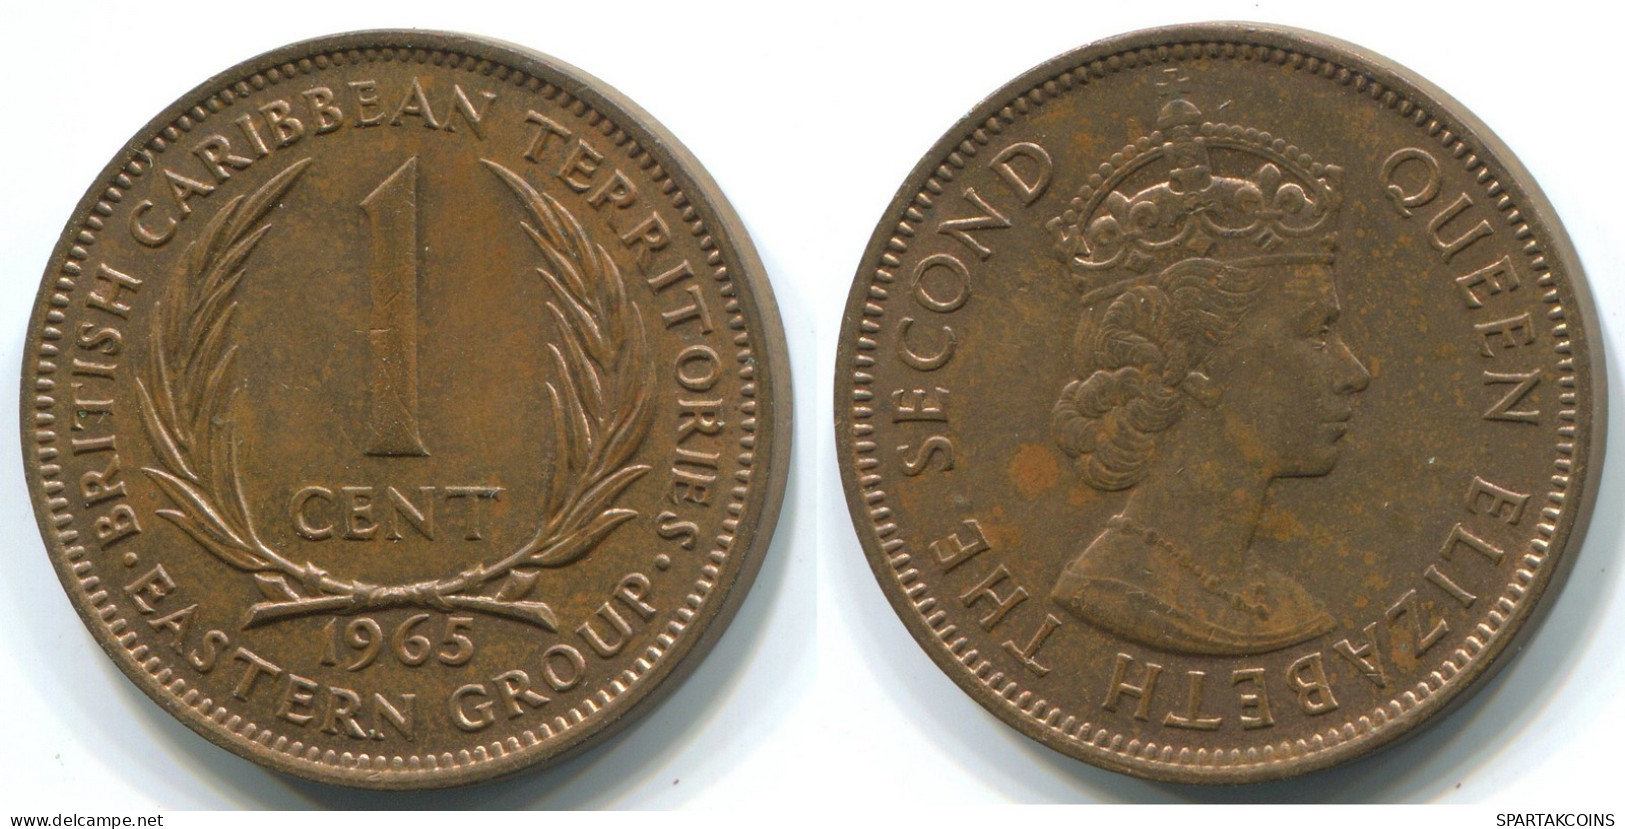 1 CENT 1965 EAST CARIBBEAN Coin #WW1181.U - Oost-Caribische Staten